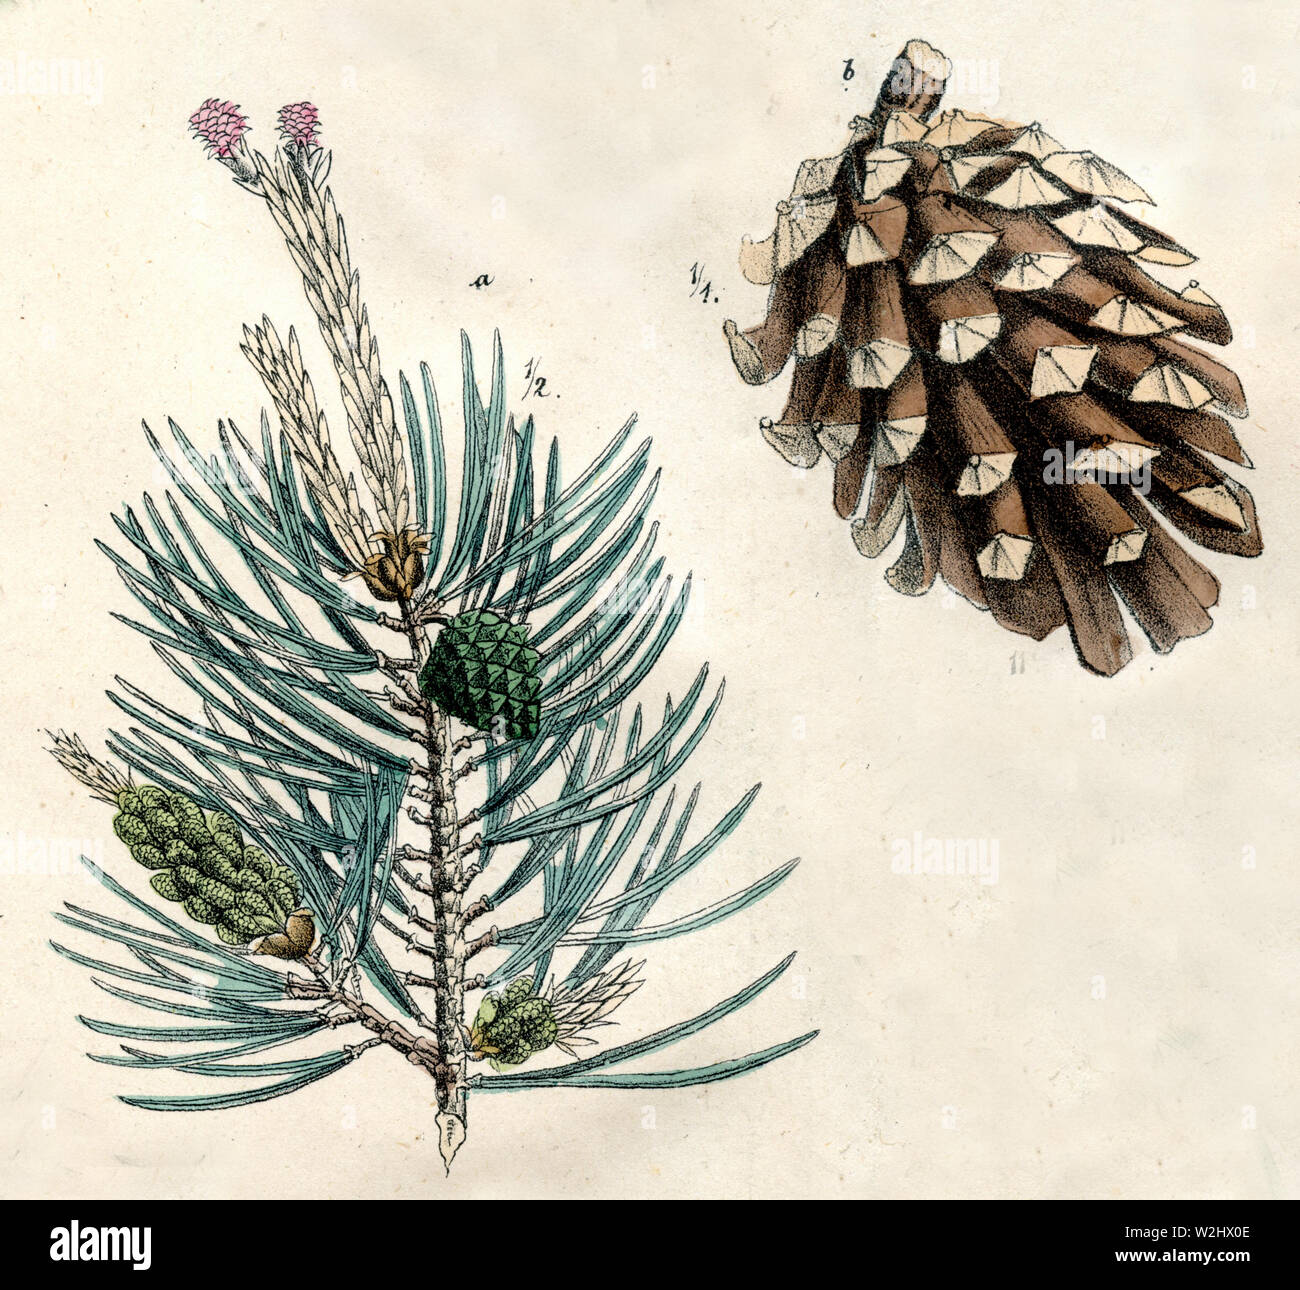 Di Pino silvestre (Pinus sylvestris) Pinus sylvestris (botanica prenota, ) Foto Stock